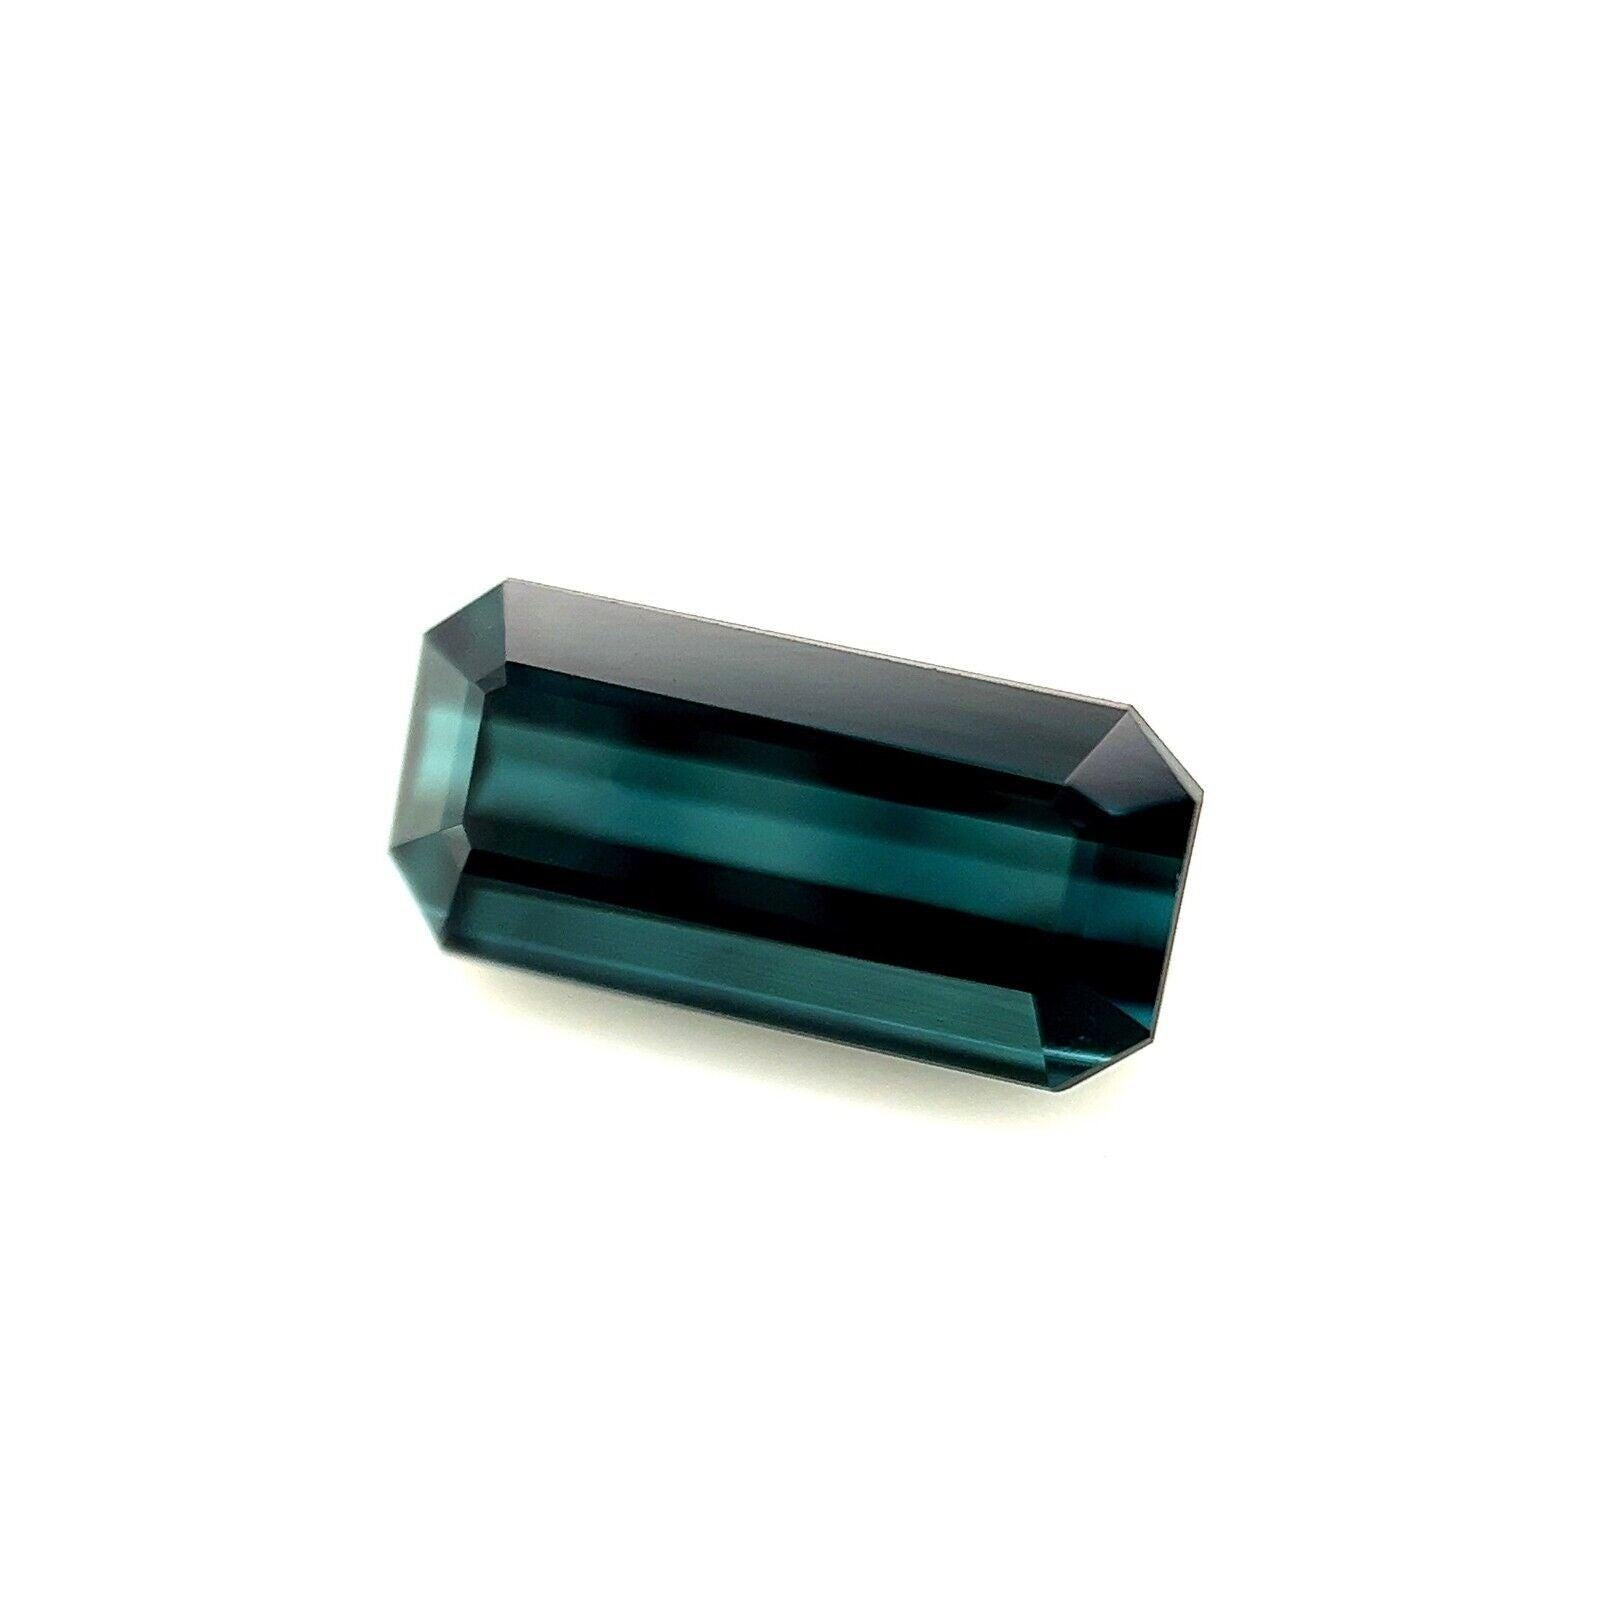 1.84ct Indicolite Blue Tourmaline Emerald Cut Rare Loose Gemstone 9.9x4.8mm VVS

Natural Vivid Indicolite Blue Tourmaline Gemstone.
1.84 Carat with a beautiful deep green blue colour and excellent clarity. Also has an excellent octagon/emerald cut